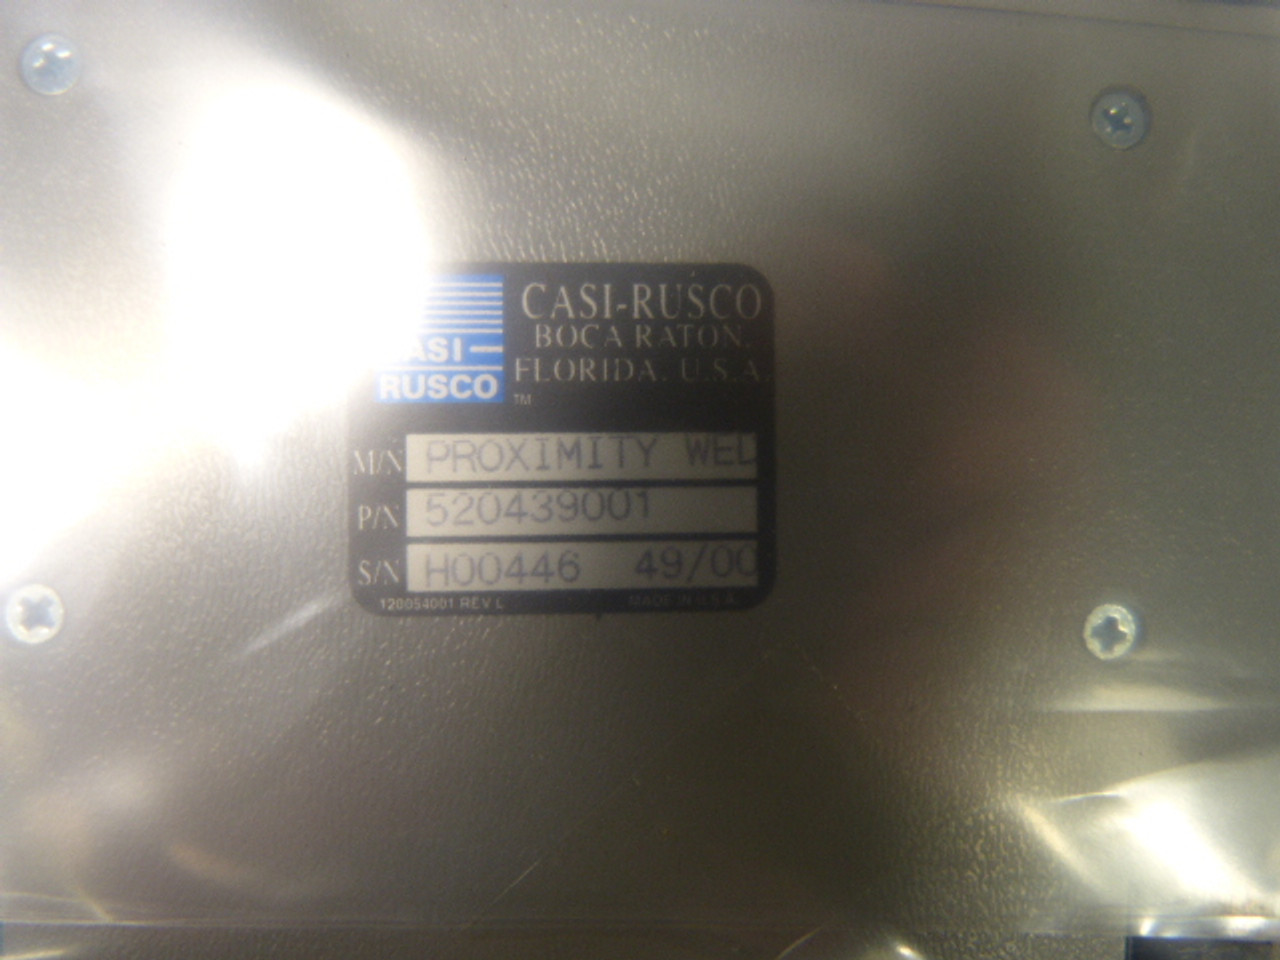 Casi Rusco 520439001 RDR Proximity Wedge Keyboard ! NEW !